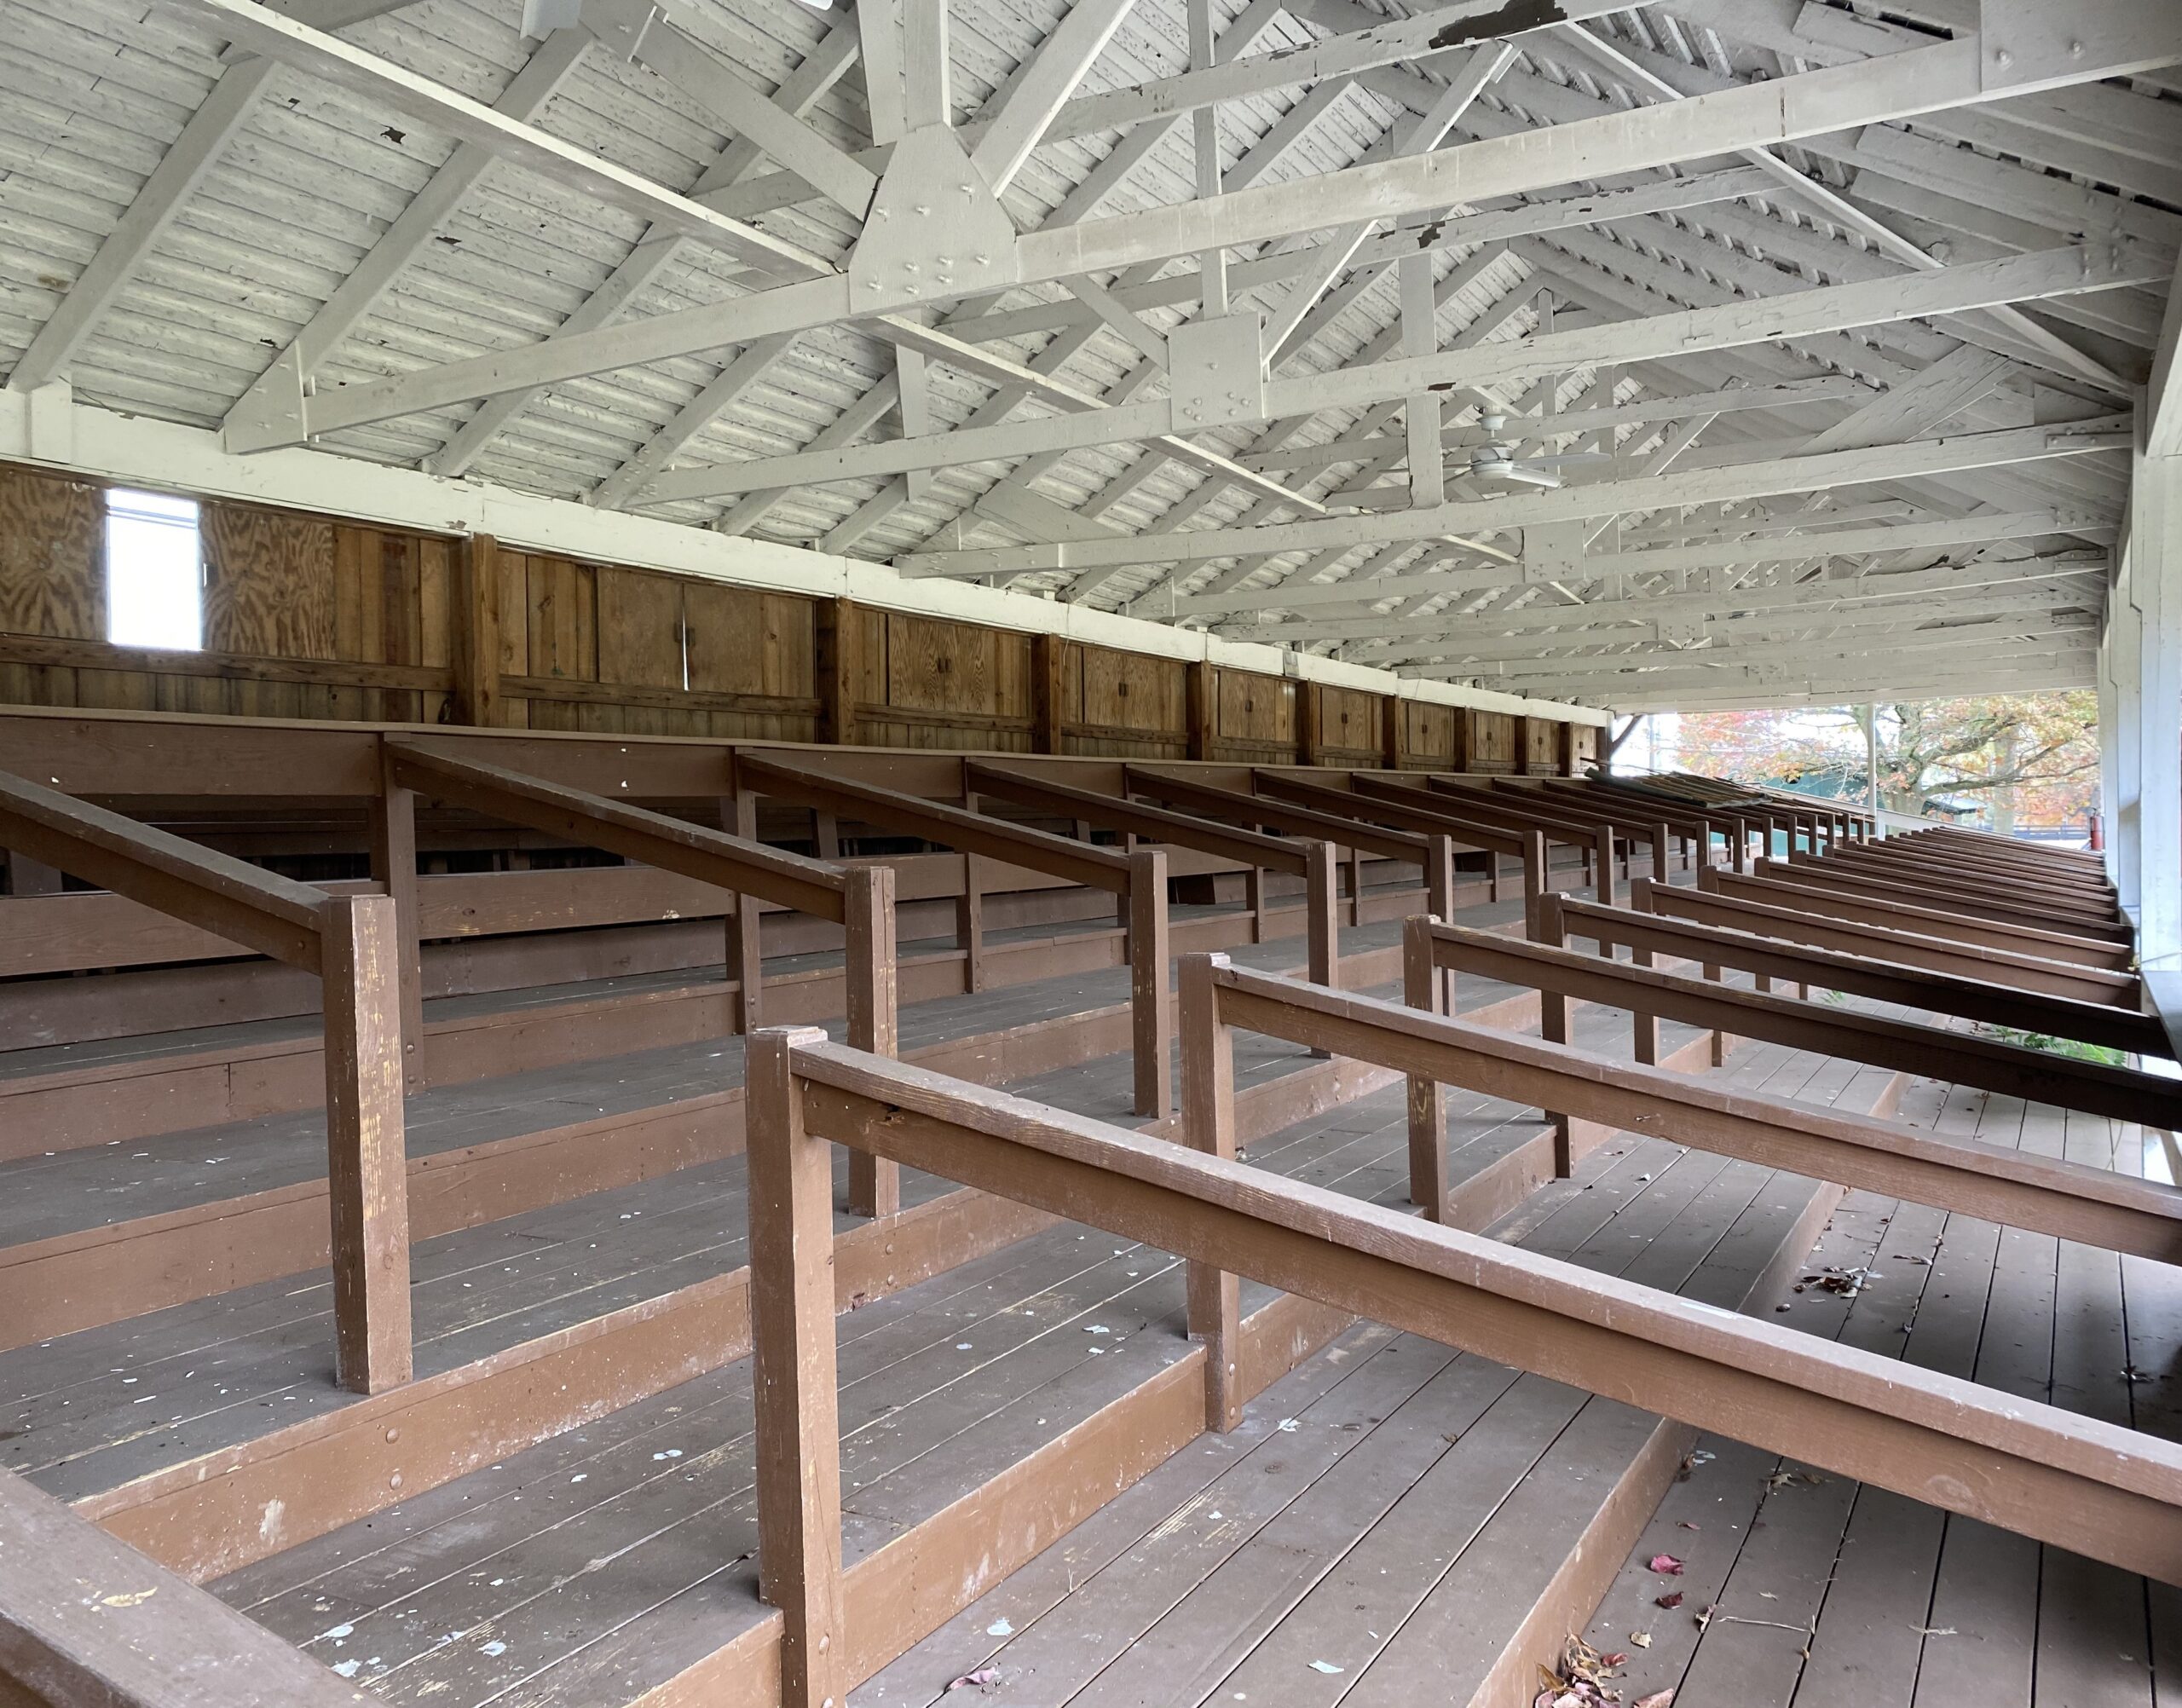 Grandstand interior. Photo credit: Maral Kalbian, 2020